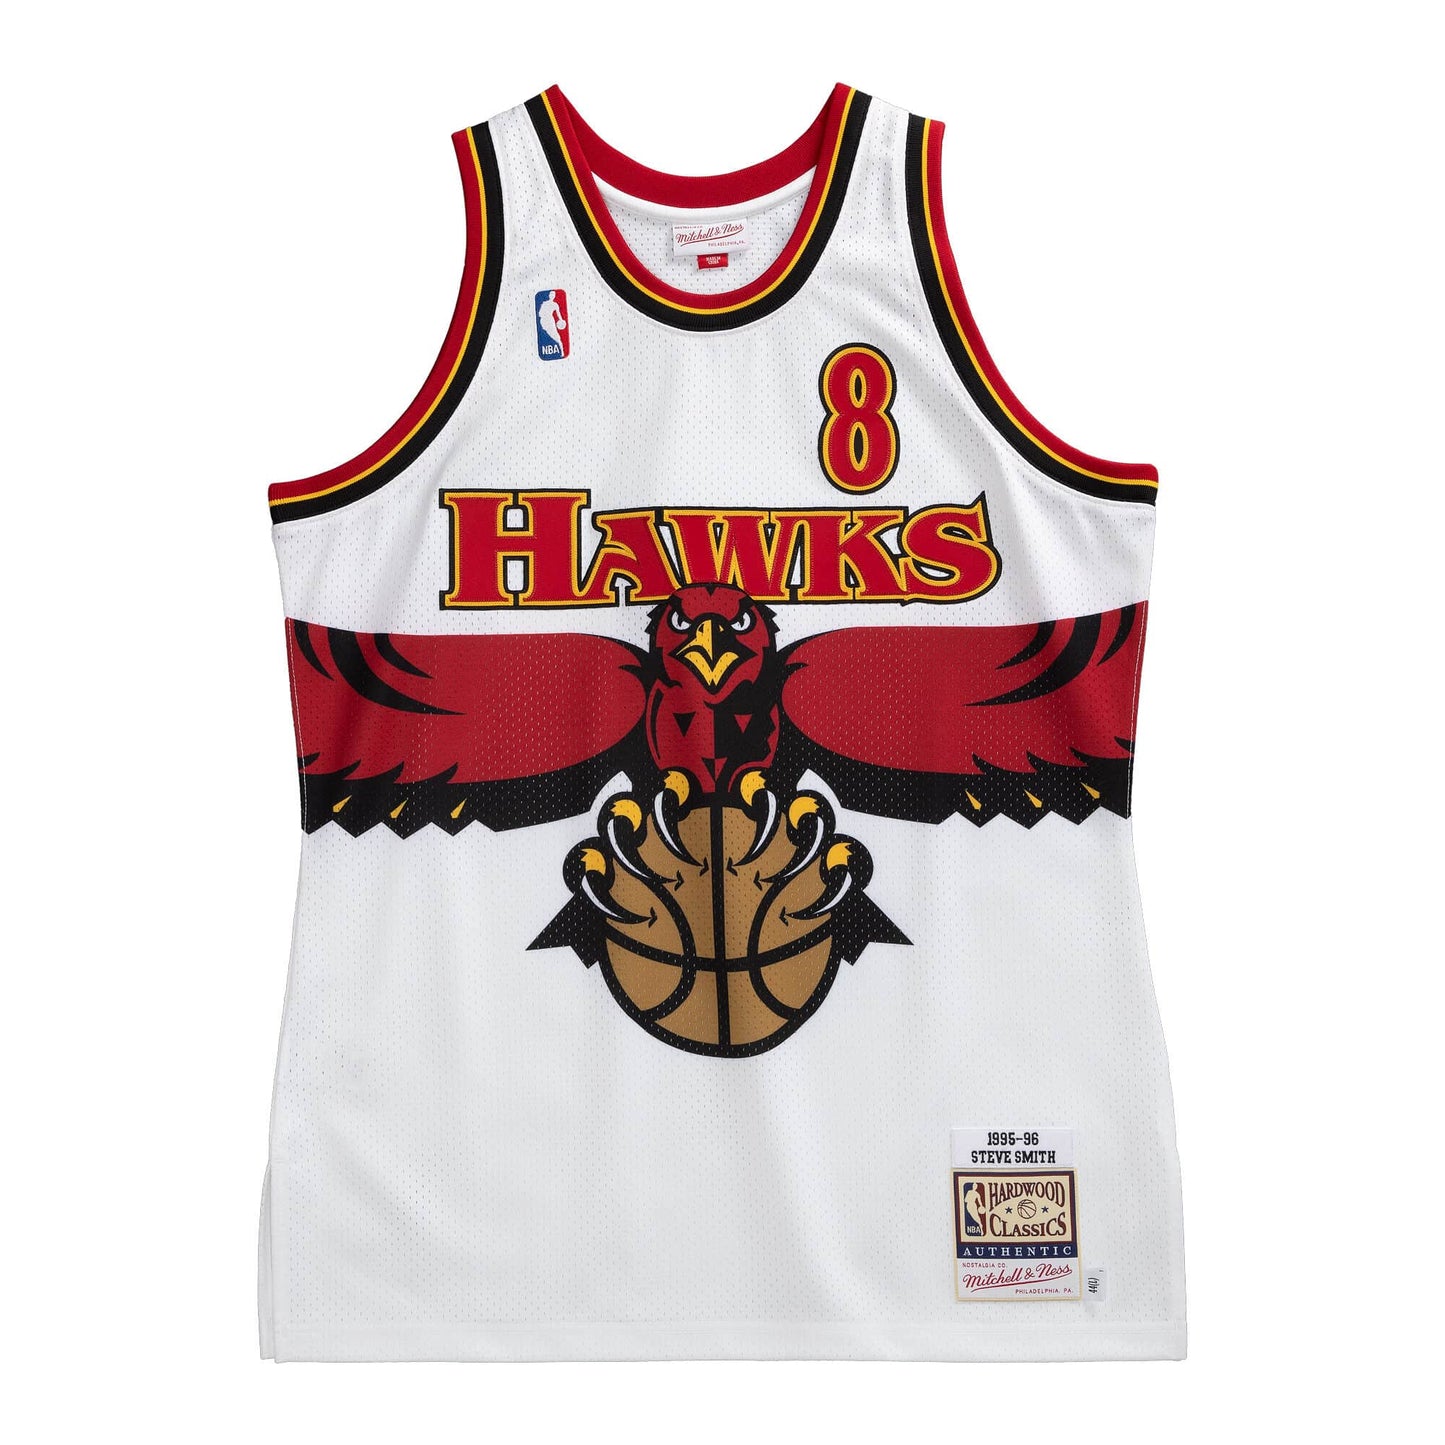 Authentic Steve Smith Atlanta Hawks 1995-96 Jersey